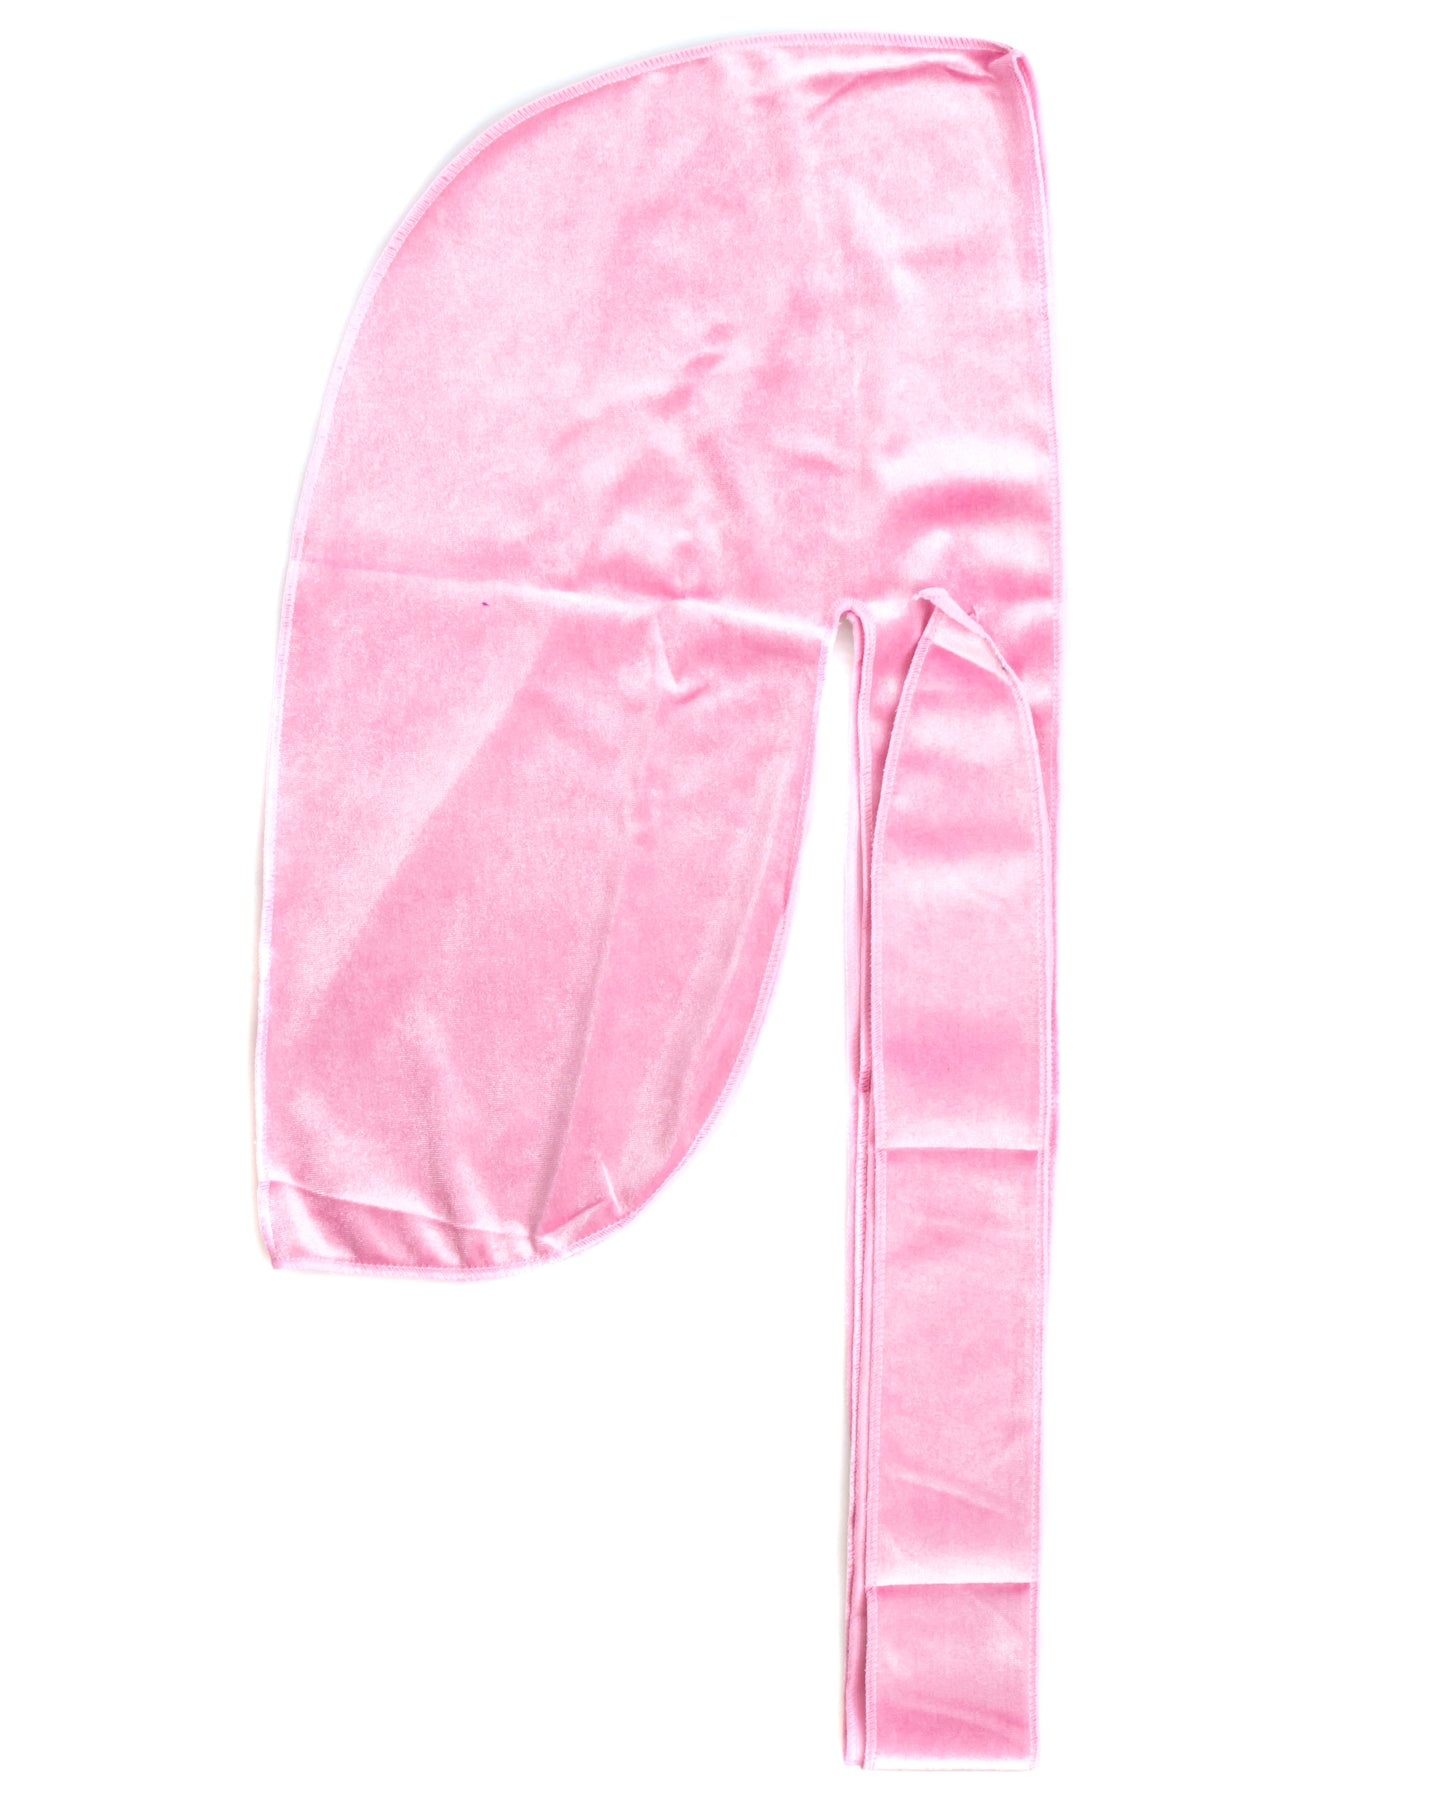 WavePro Durags, Silky Pink LV Durag